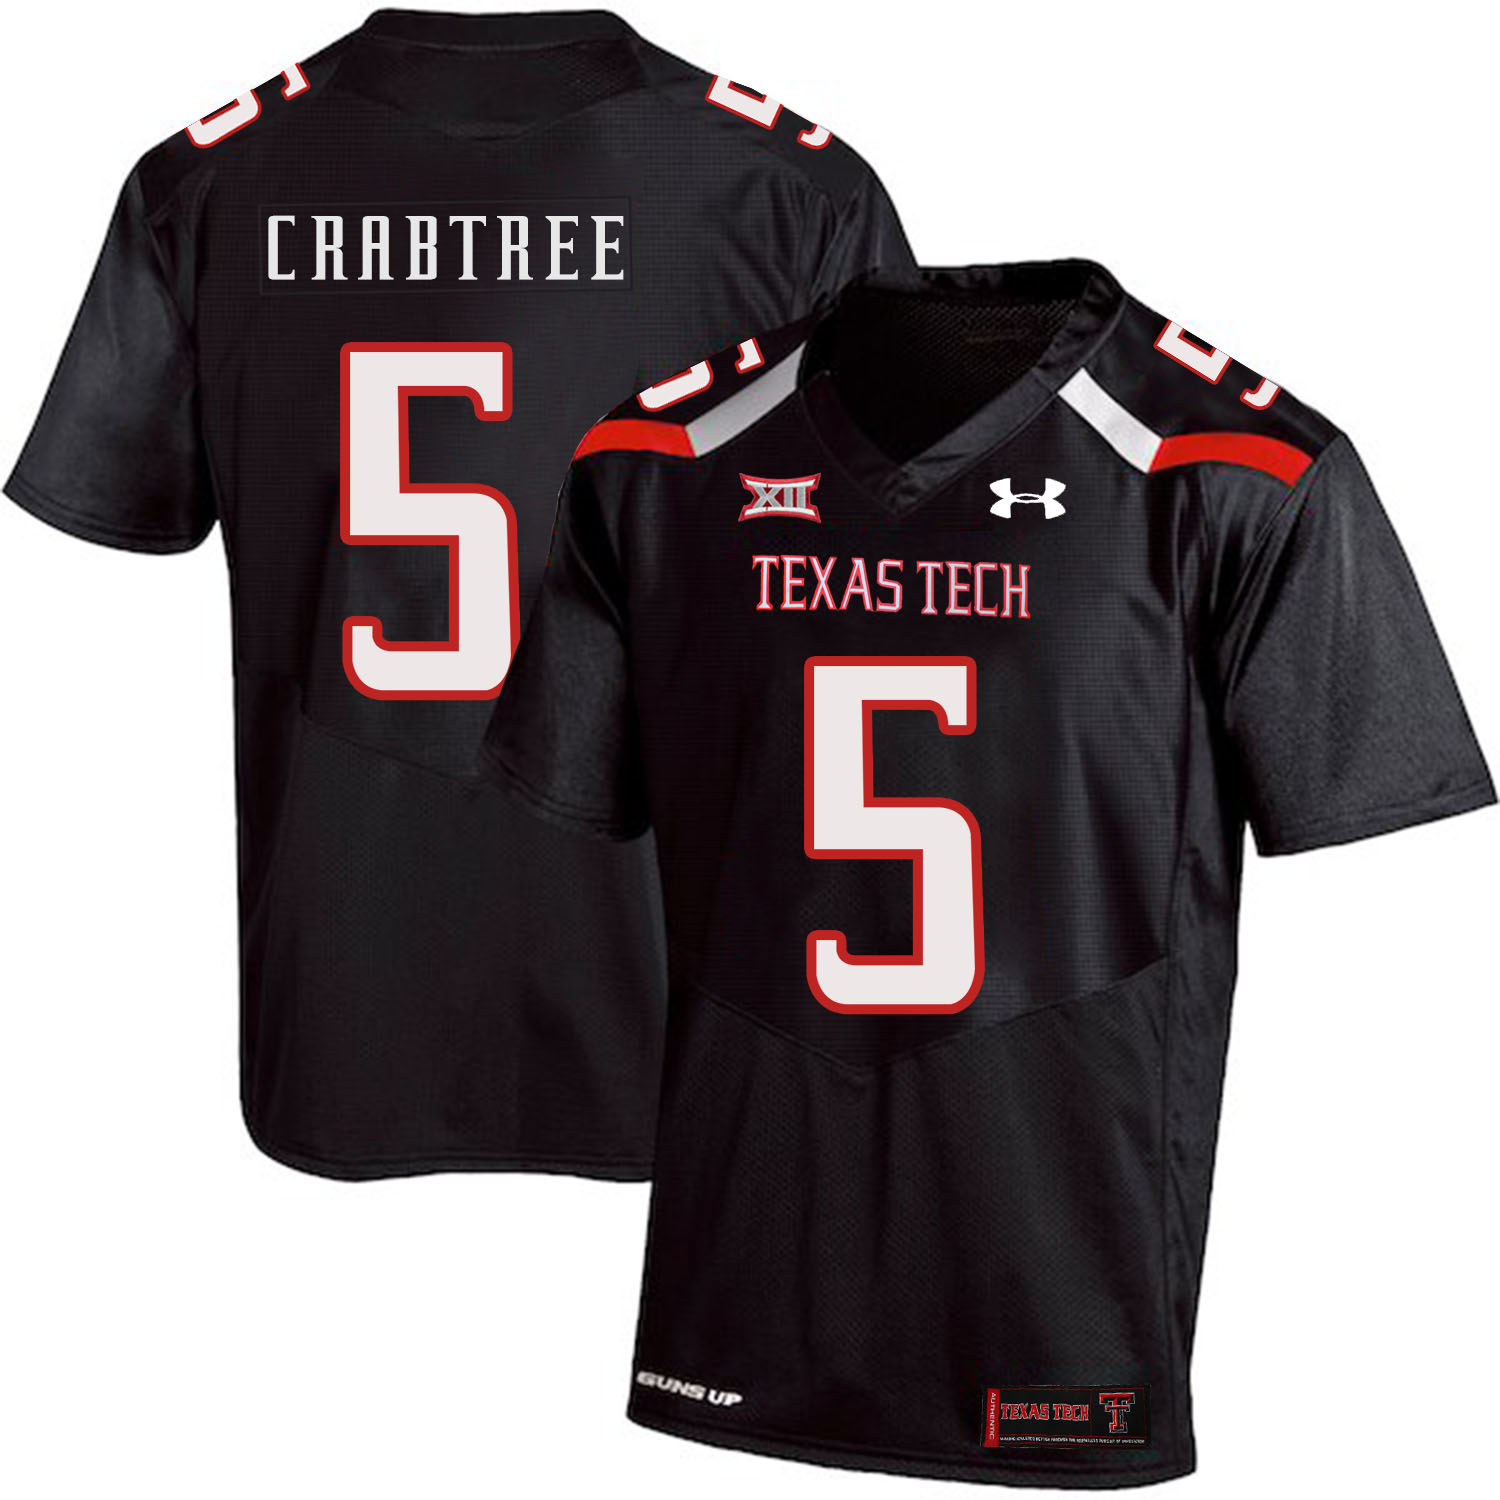 Texas Tech Red Raiders 5 Michael Crabtree Black College Football Jersey